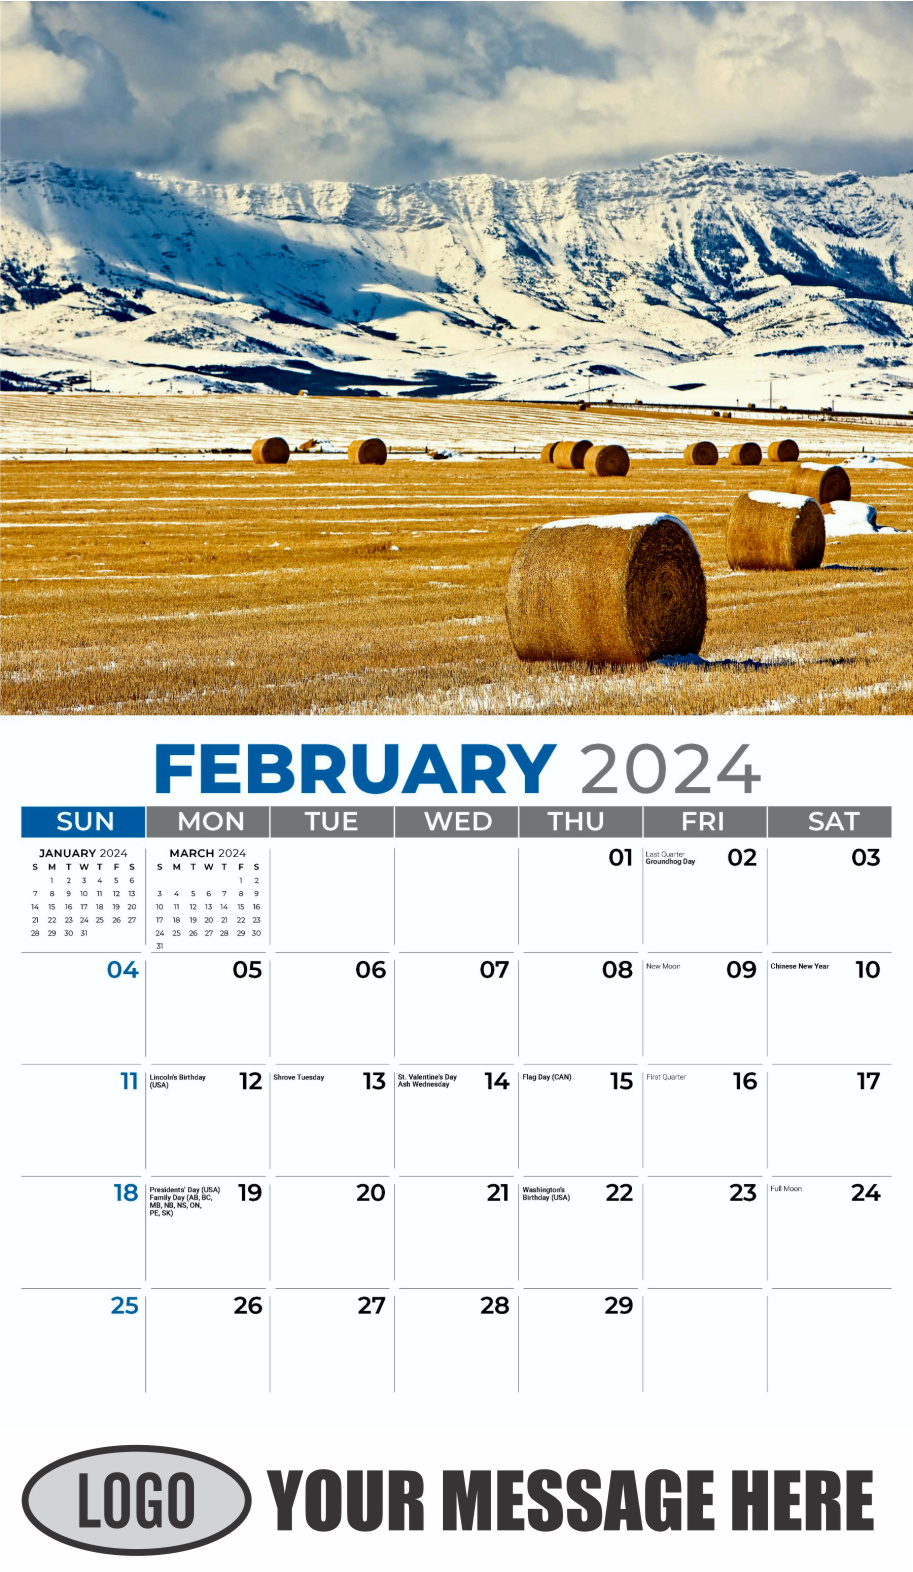 Country Spirit 2024 Business Advertising Calendar - February